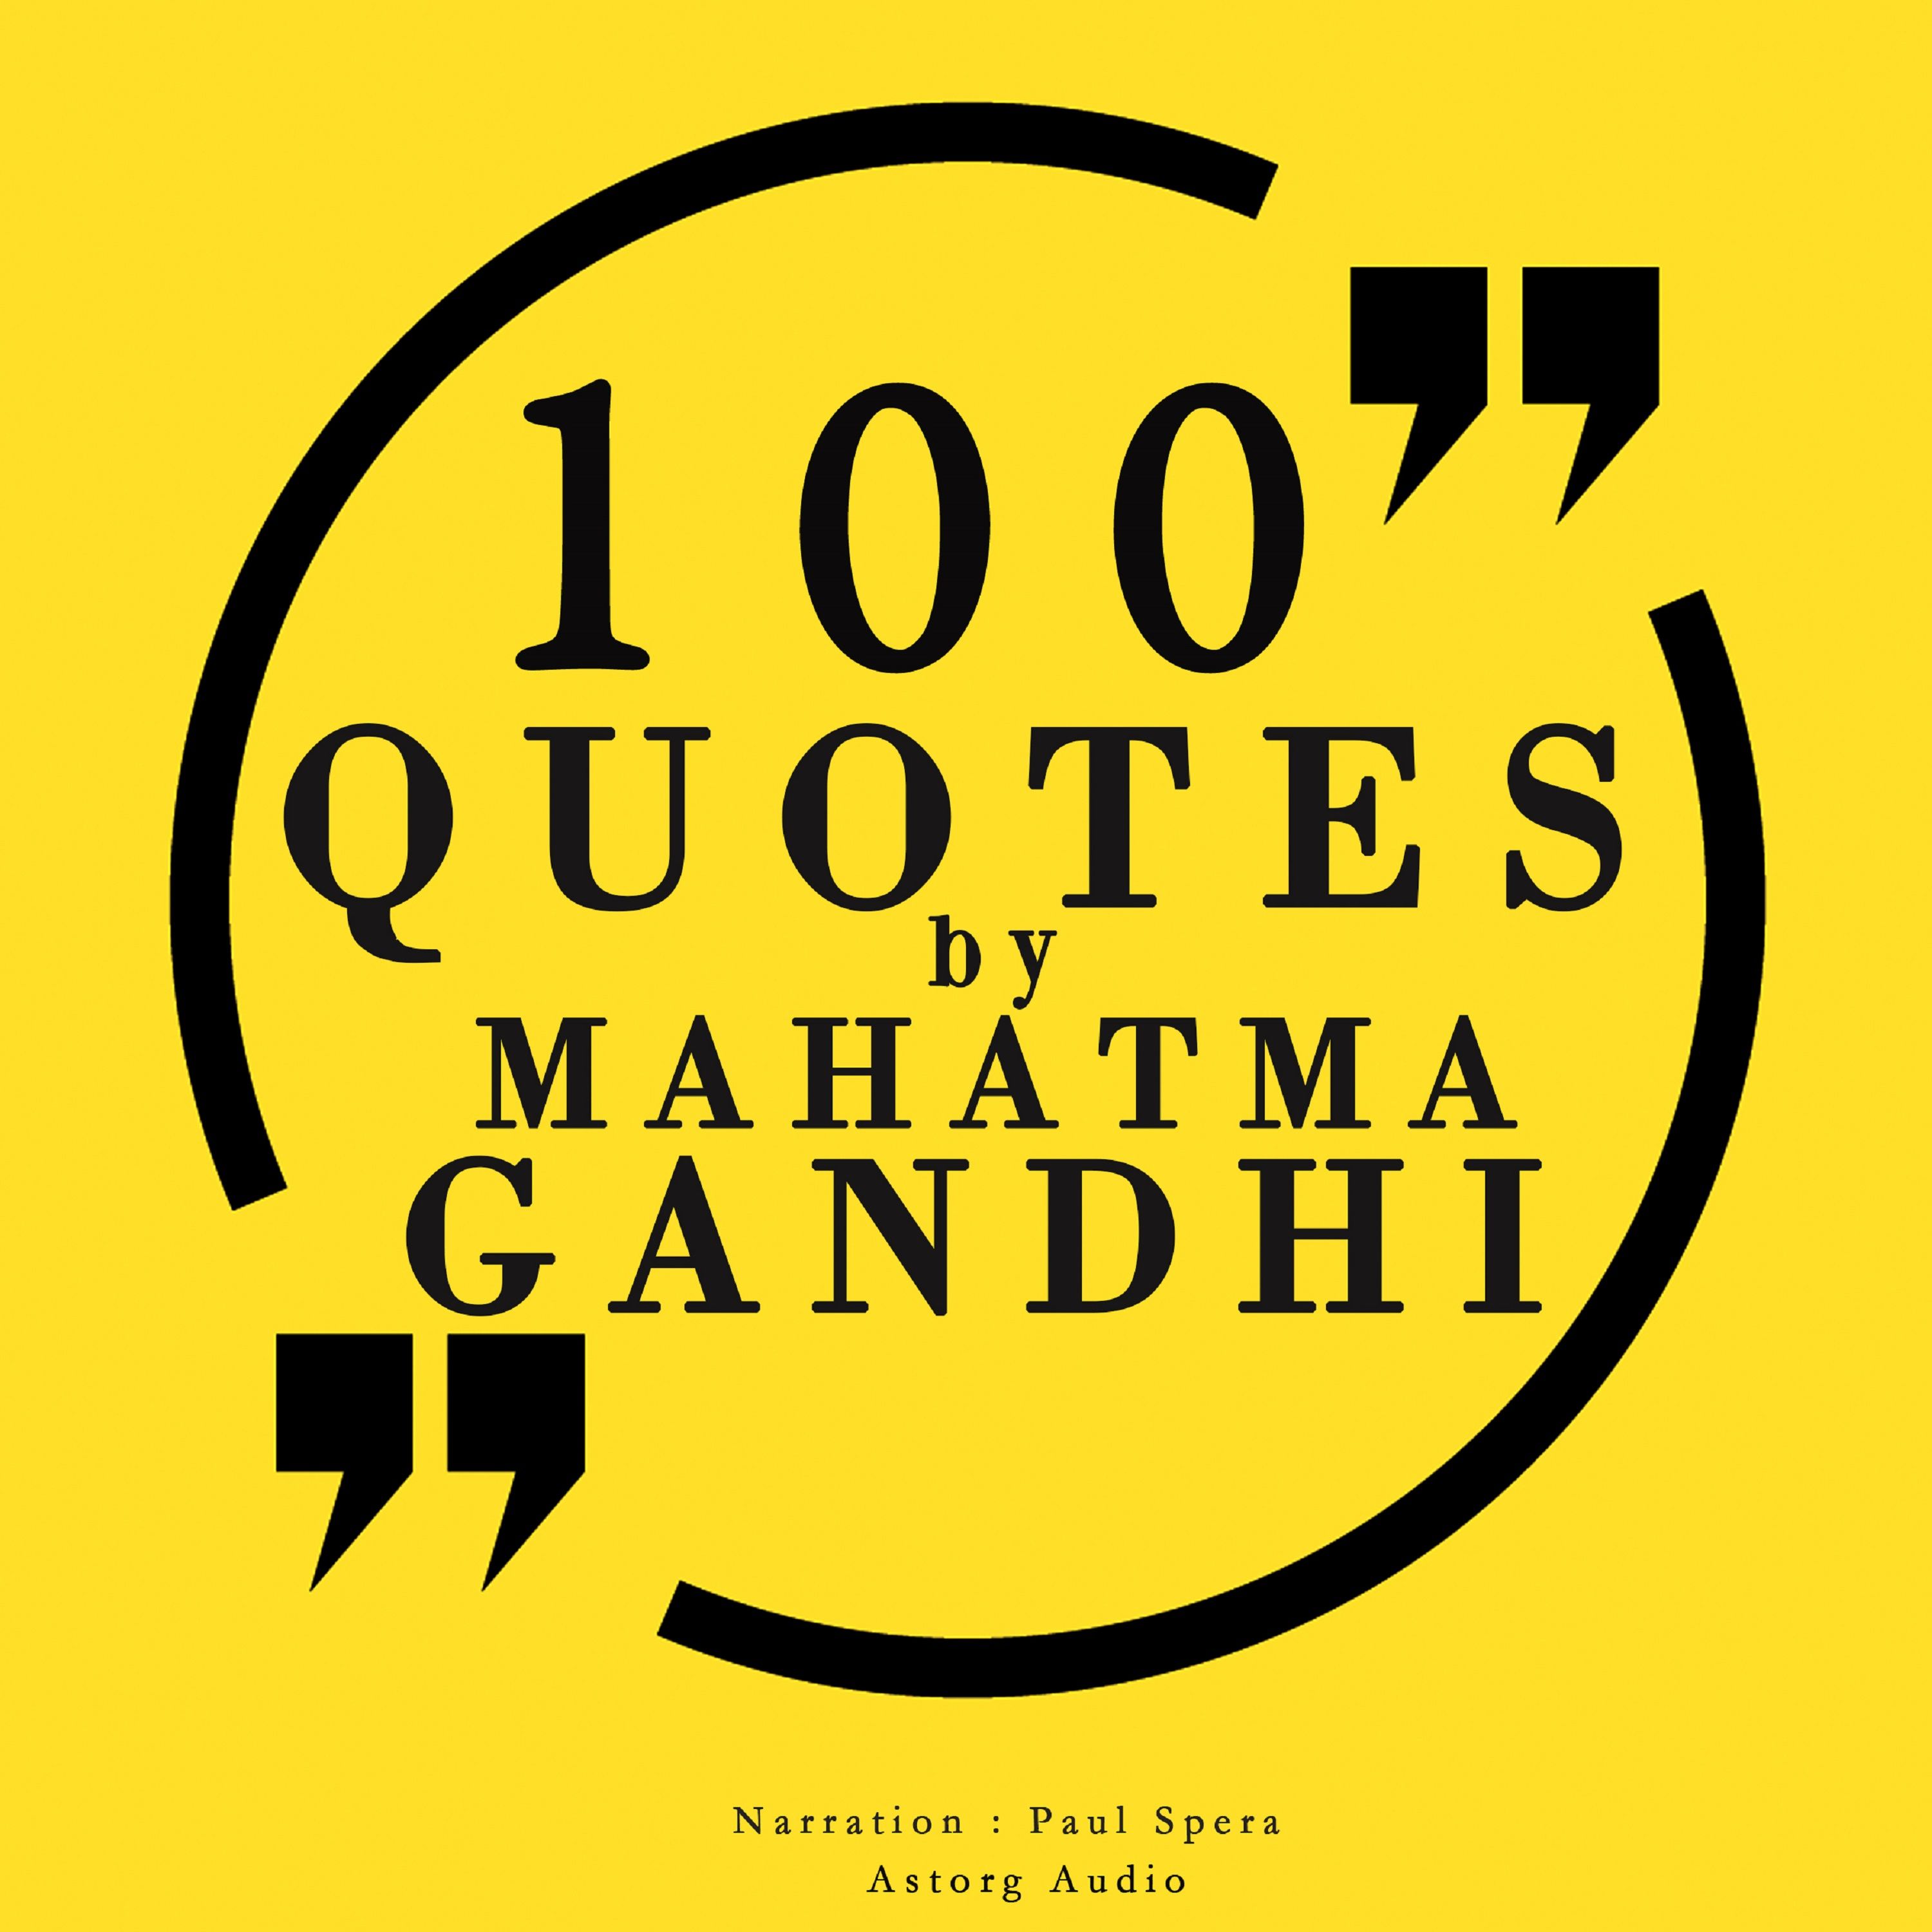 100 Quotes by Mahatma Gandhi, ljudbok av Mahatma Gandhi